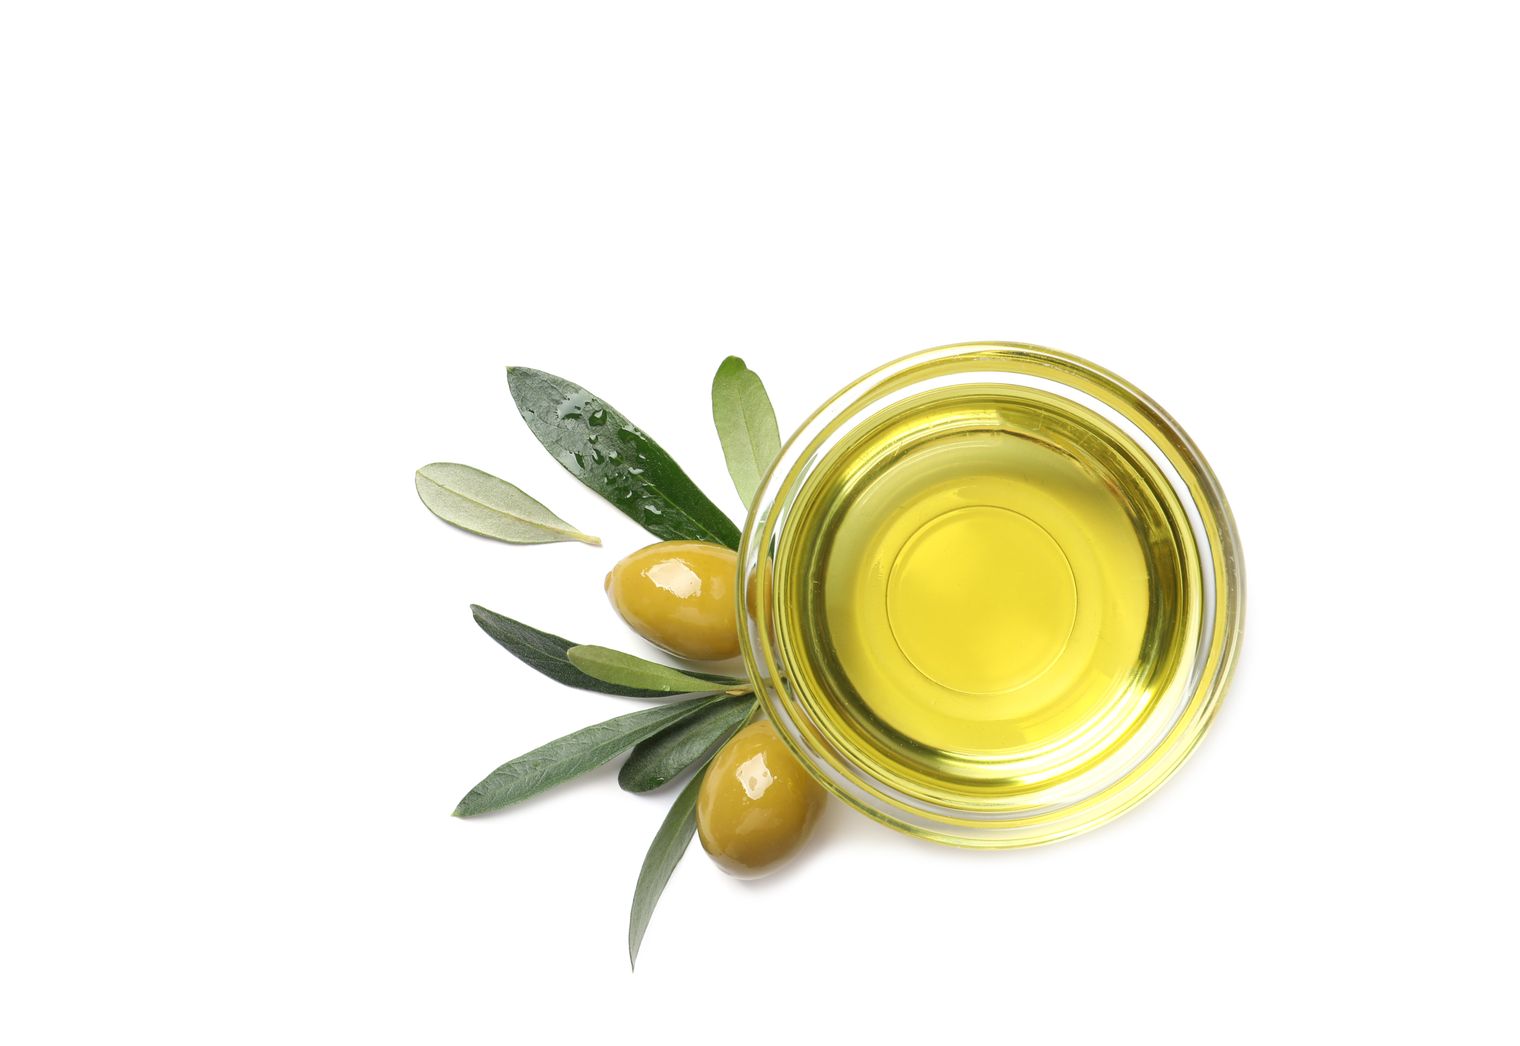 The Antioxidant & Antibacterial Properties of Olive Oil